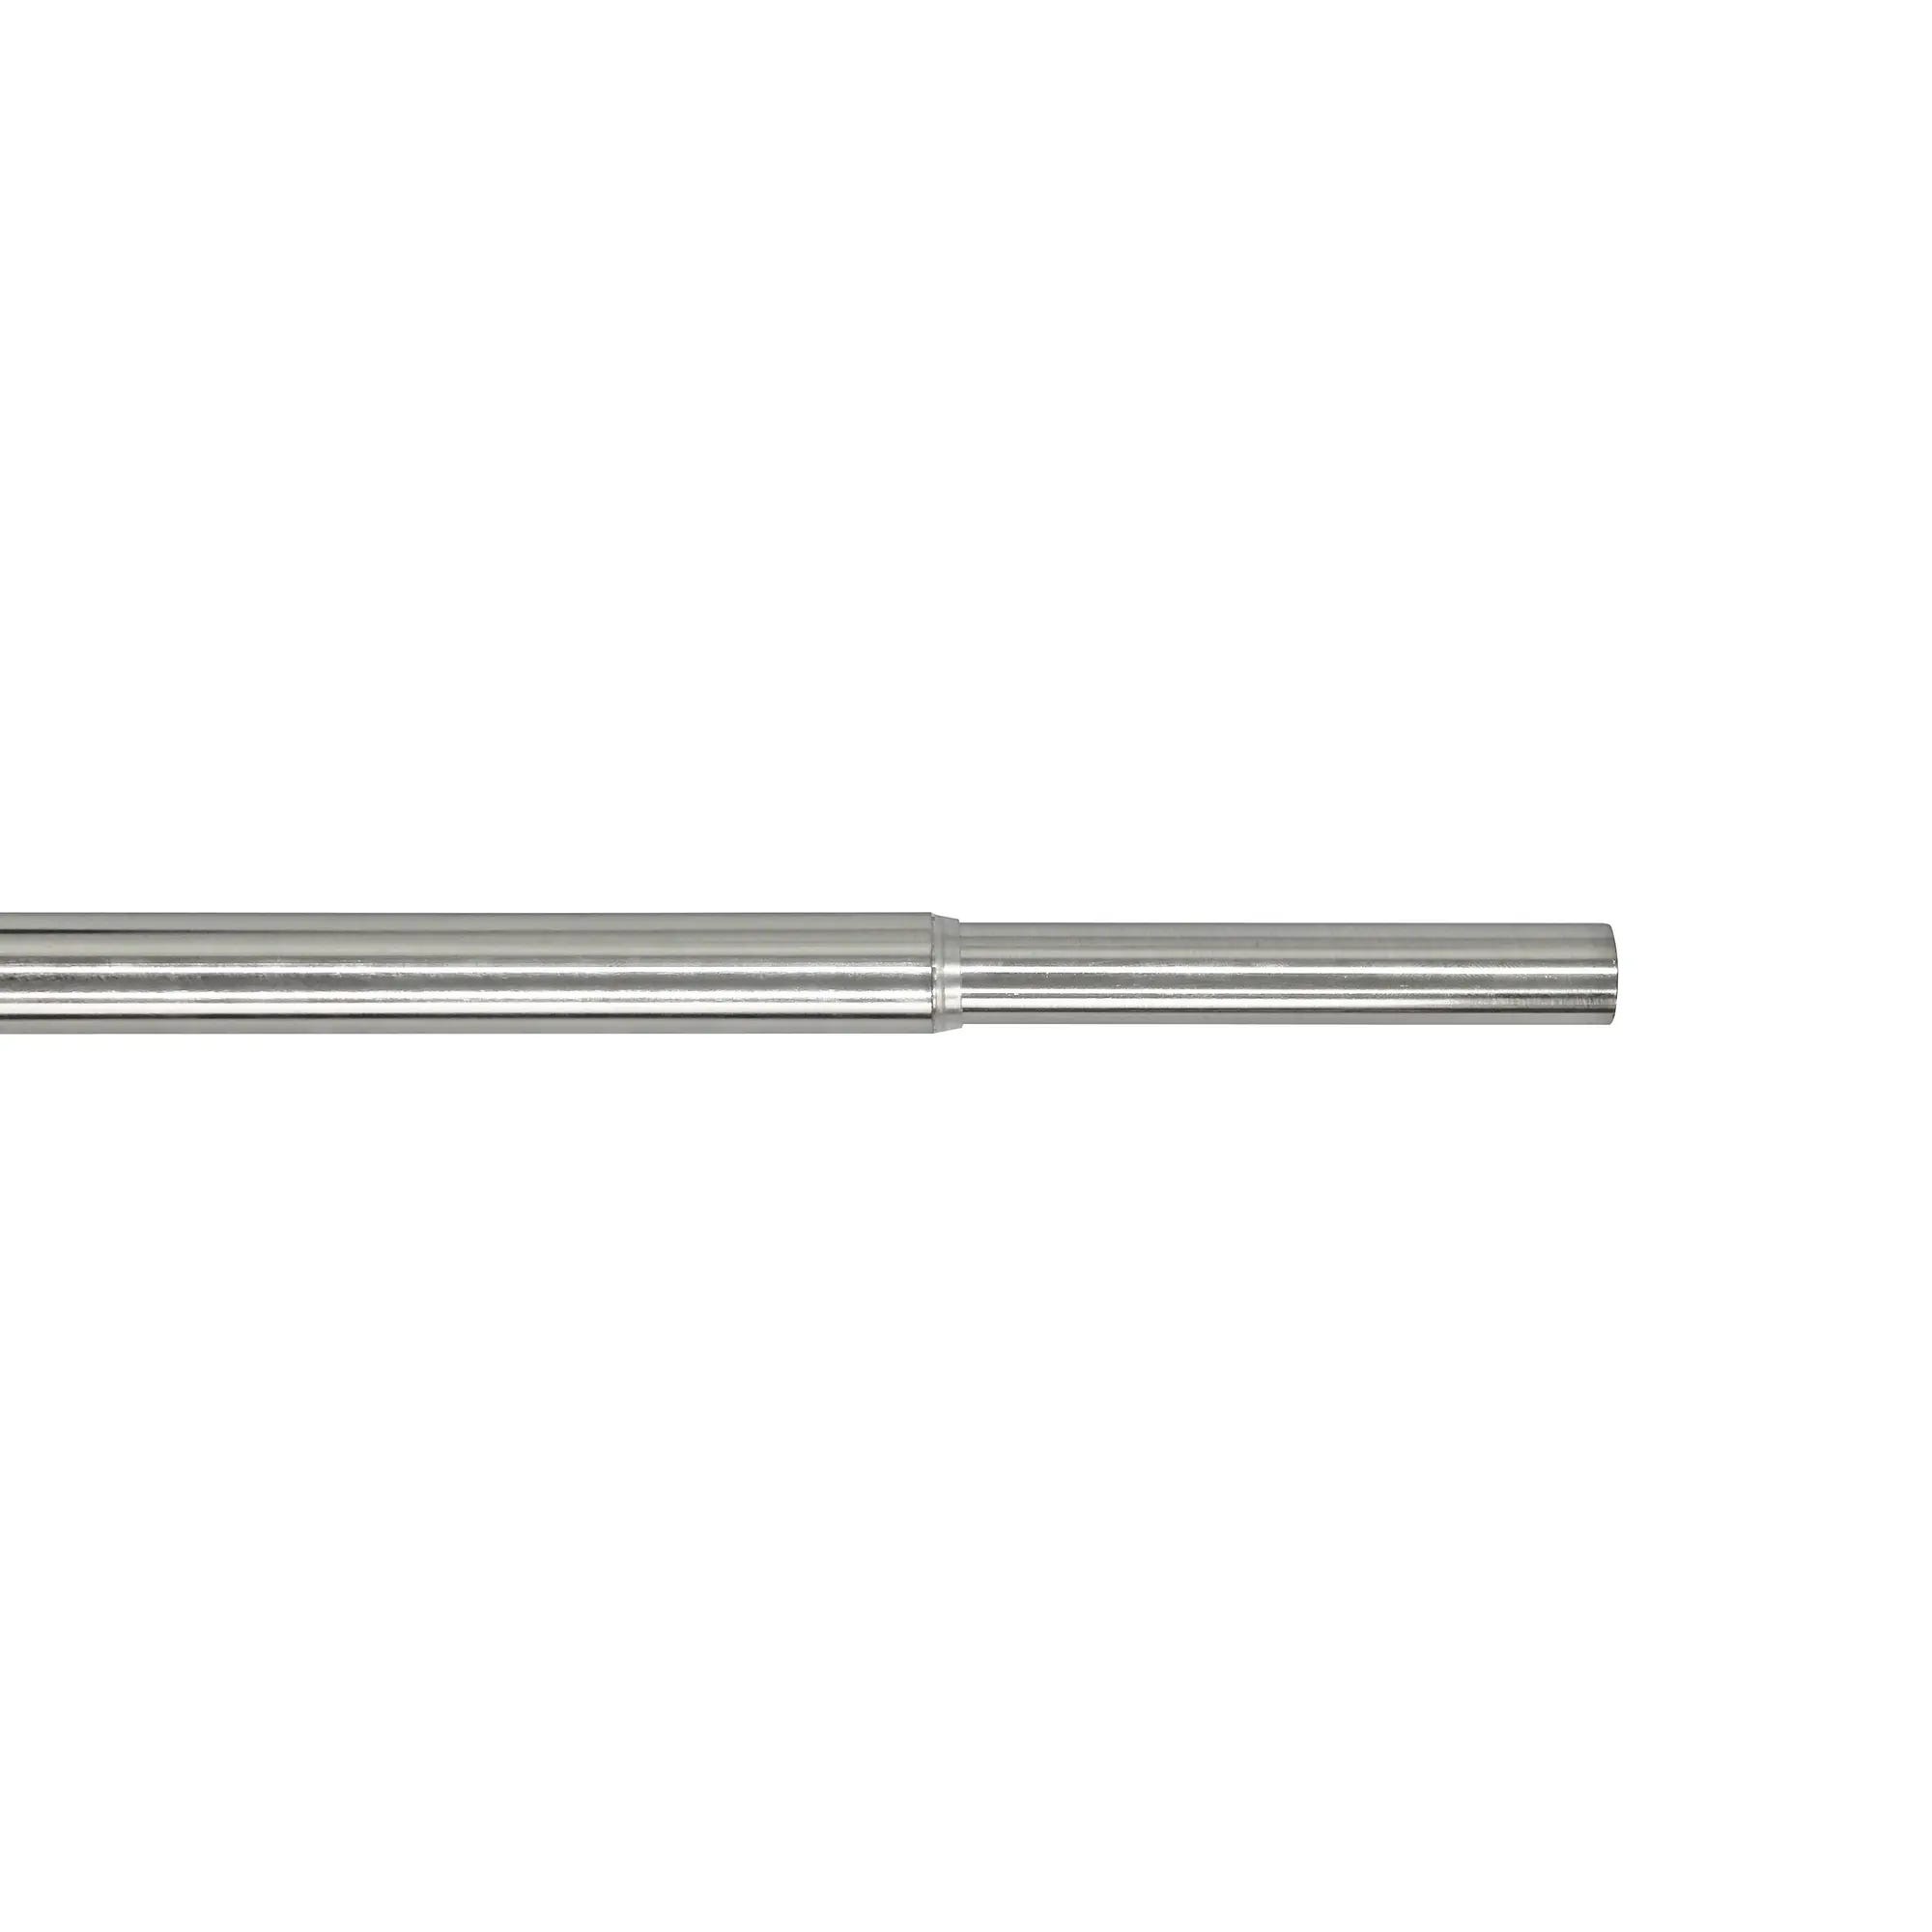 Tringle à rideau nickel Kali, L.120 - 210 cm, diam.20 mm, INSPIRE